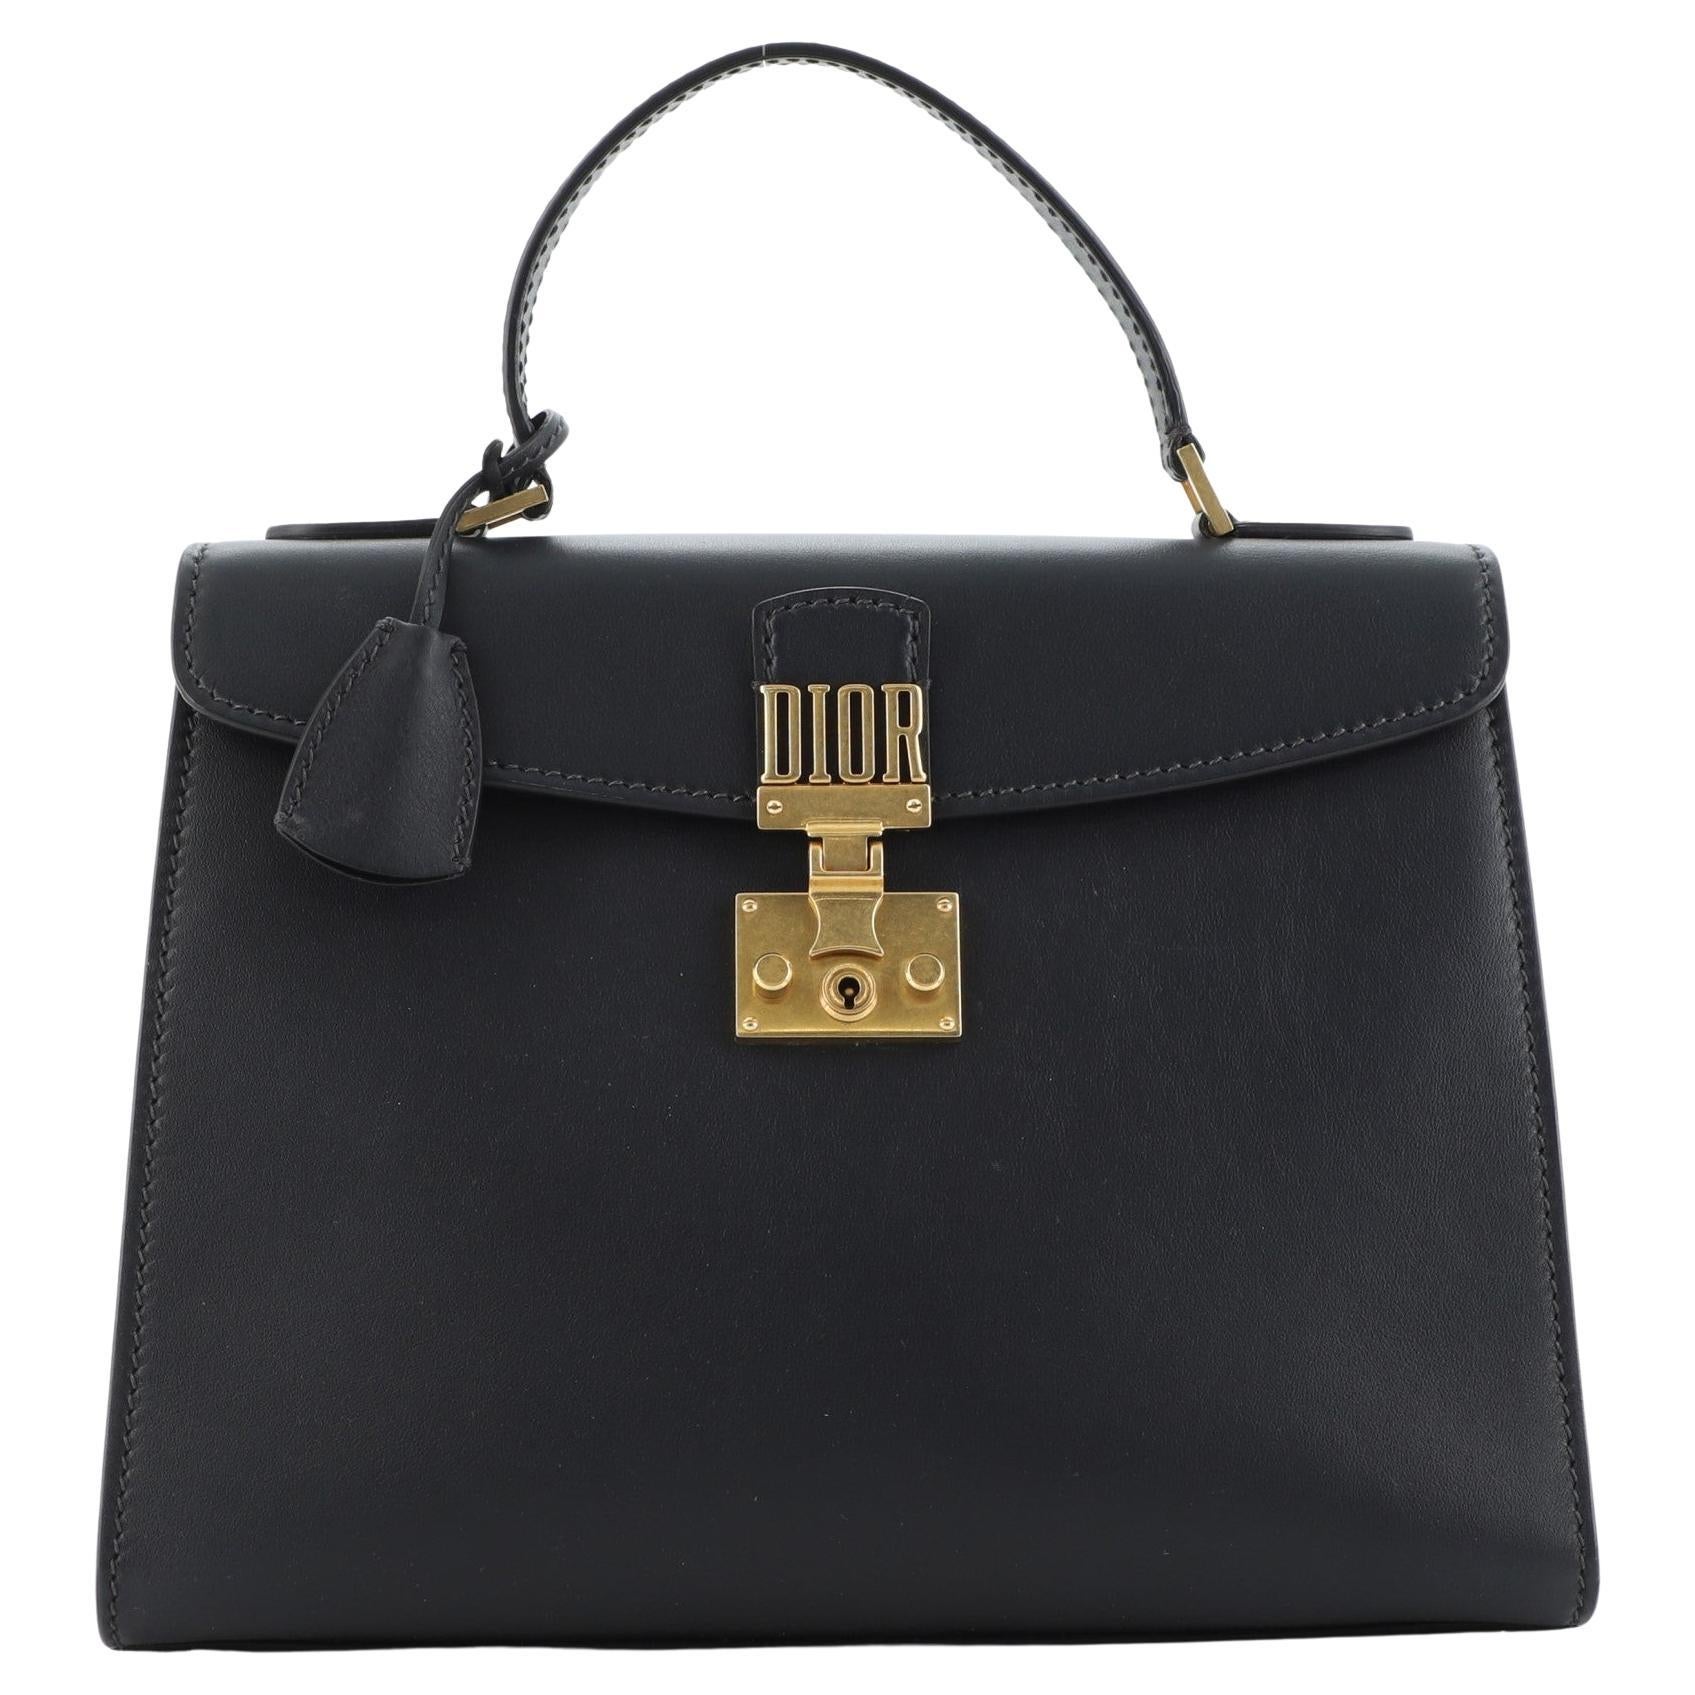 Christian Dior Dioraddict Top Handle Bag Leather Medium